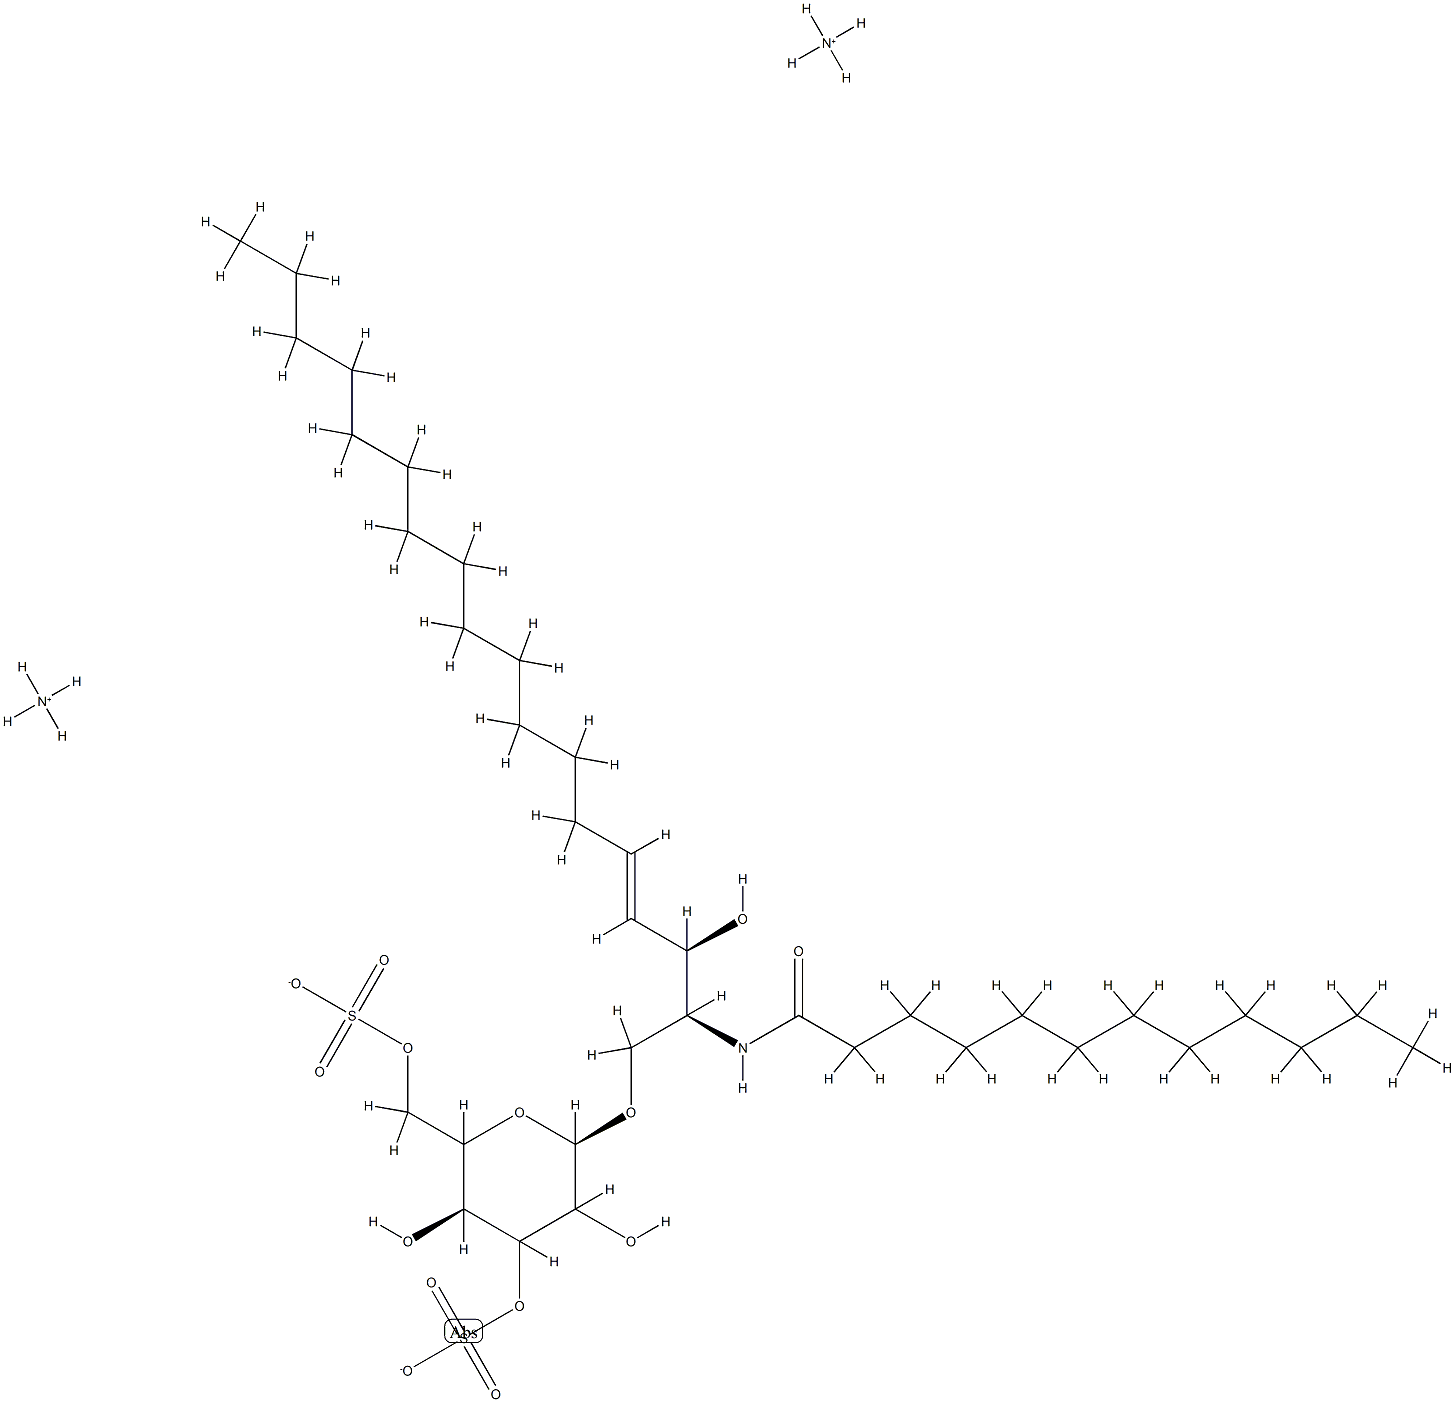 3,6-di-O-sulfo-D-galactosyl-1-1'-N-lauroyl-D-erythro-sphingosine (aMMoniuM salt) Structure